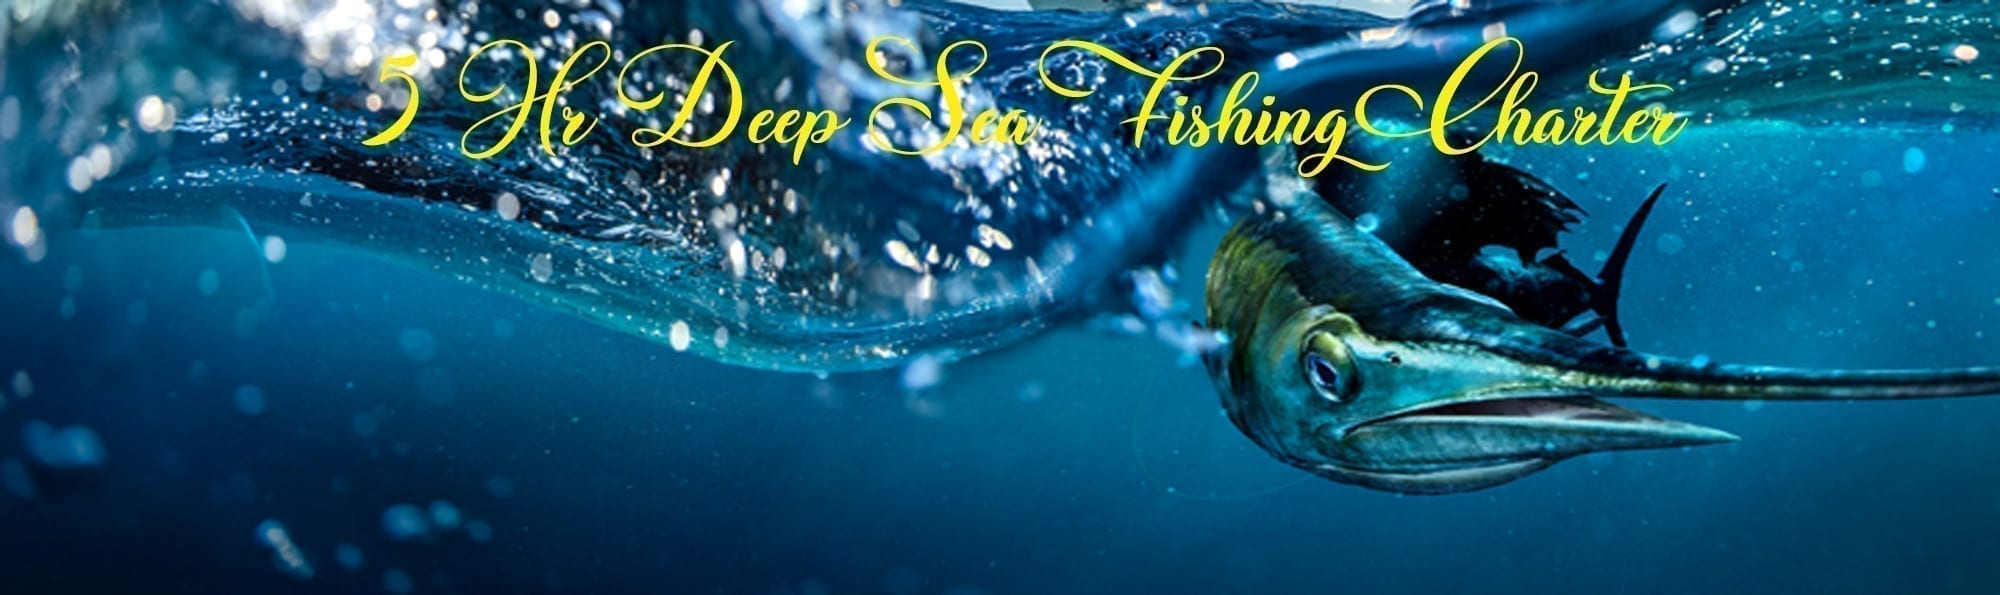 5Hr Deep Sea Fishing Charter